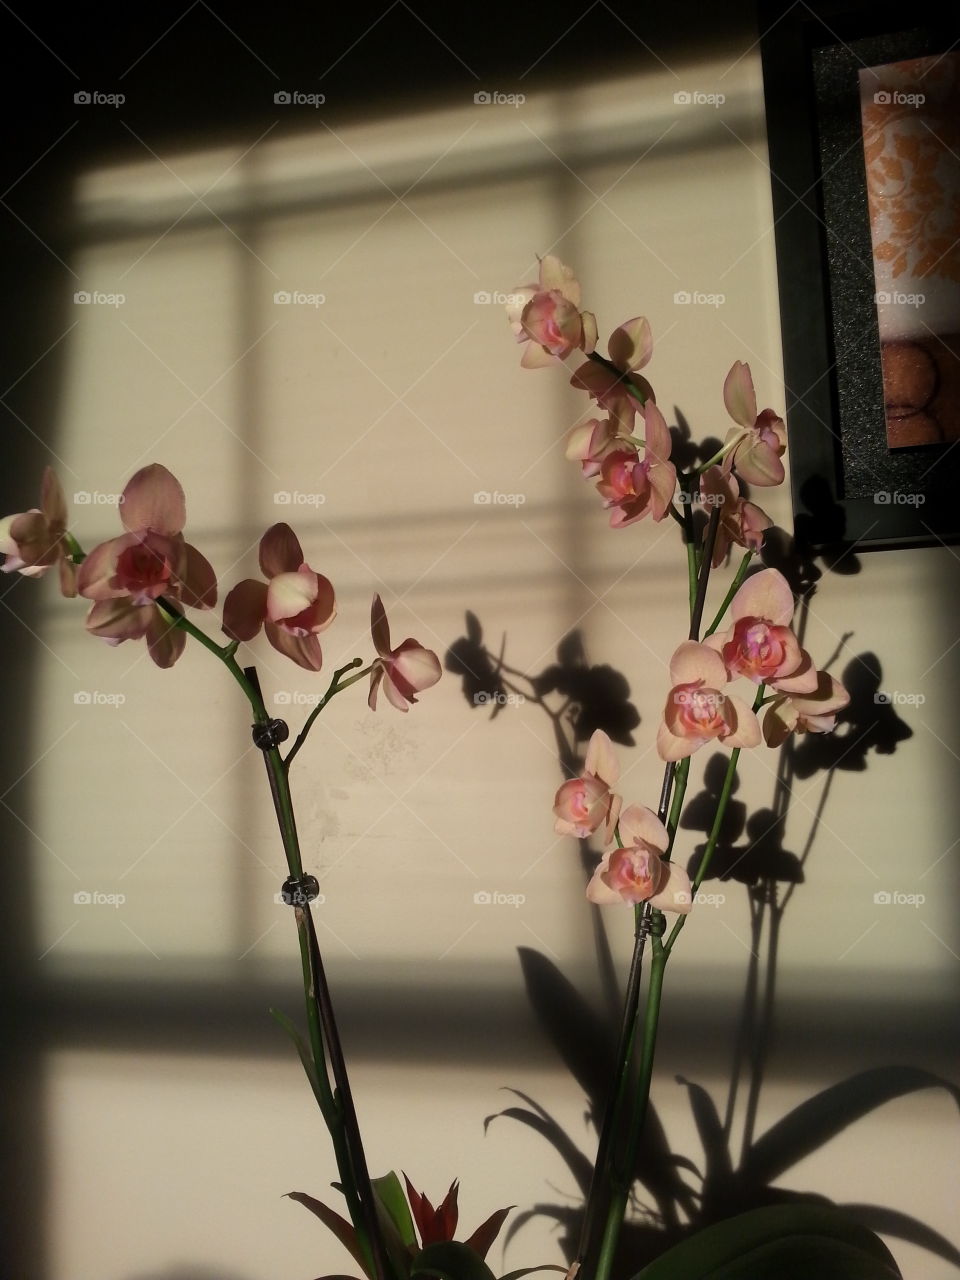 flowers. sunlight through the window